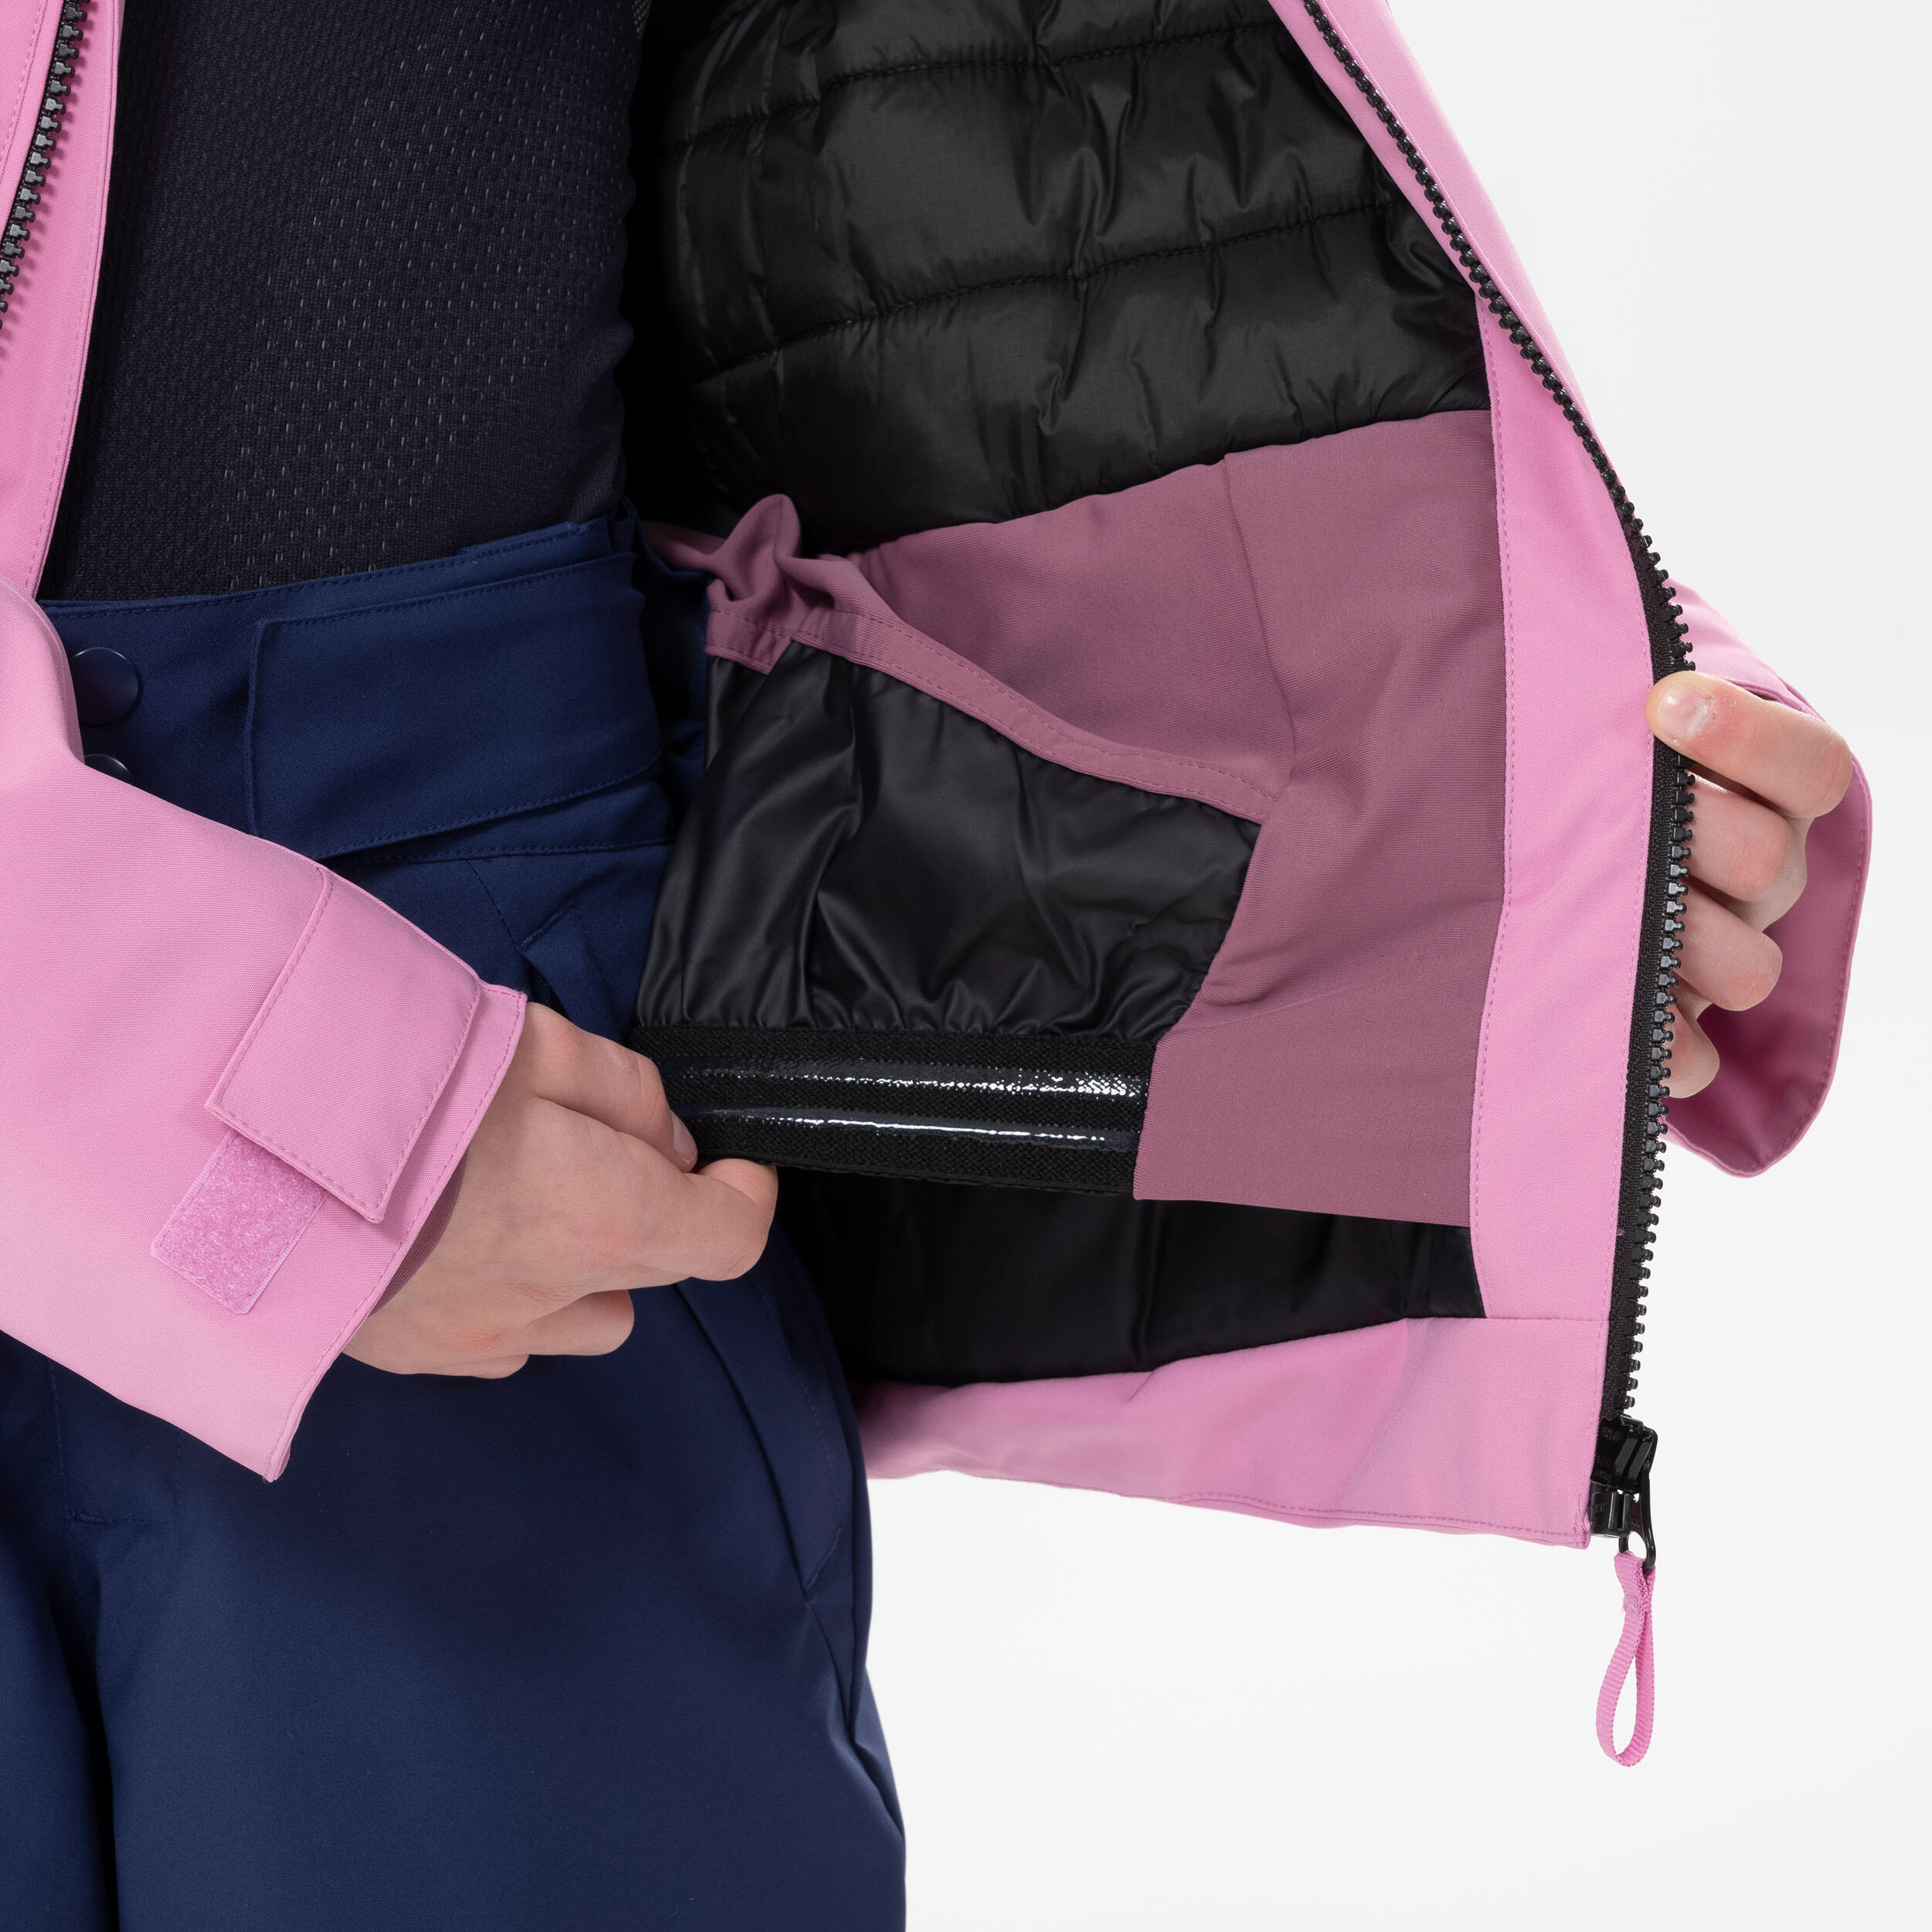 Kids’ Warm and Waterproof Ski Jacket 550 - Pink 6/20